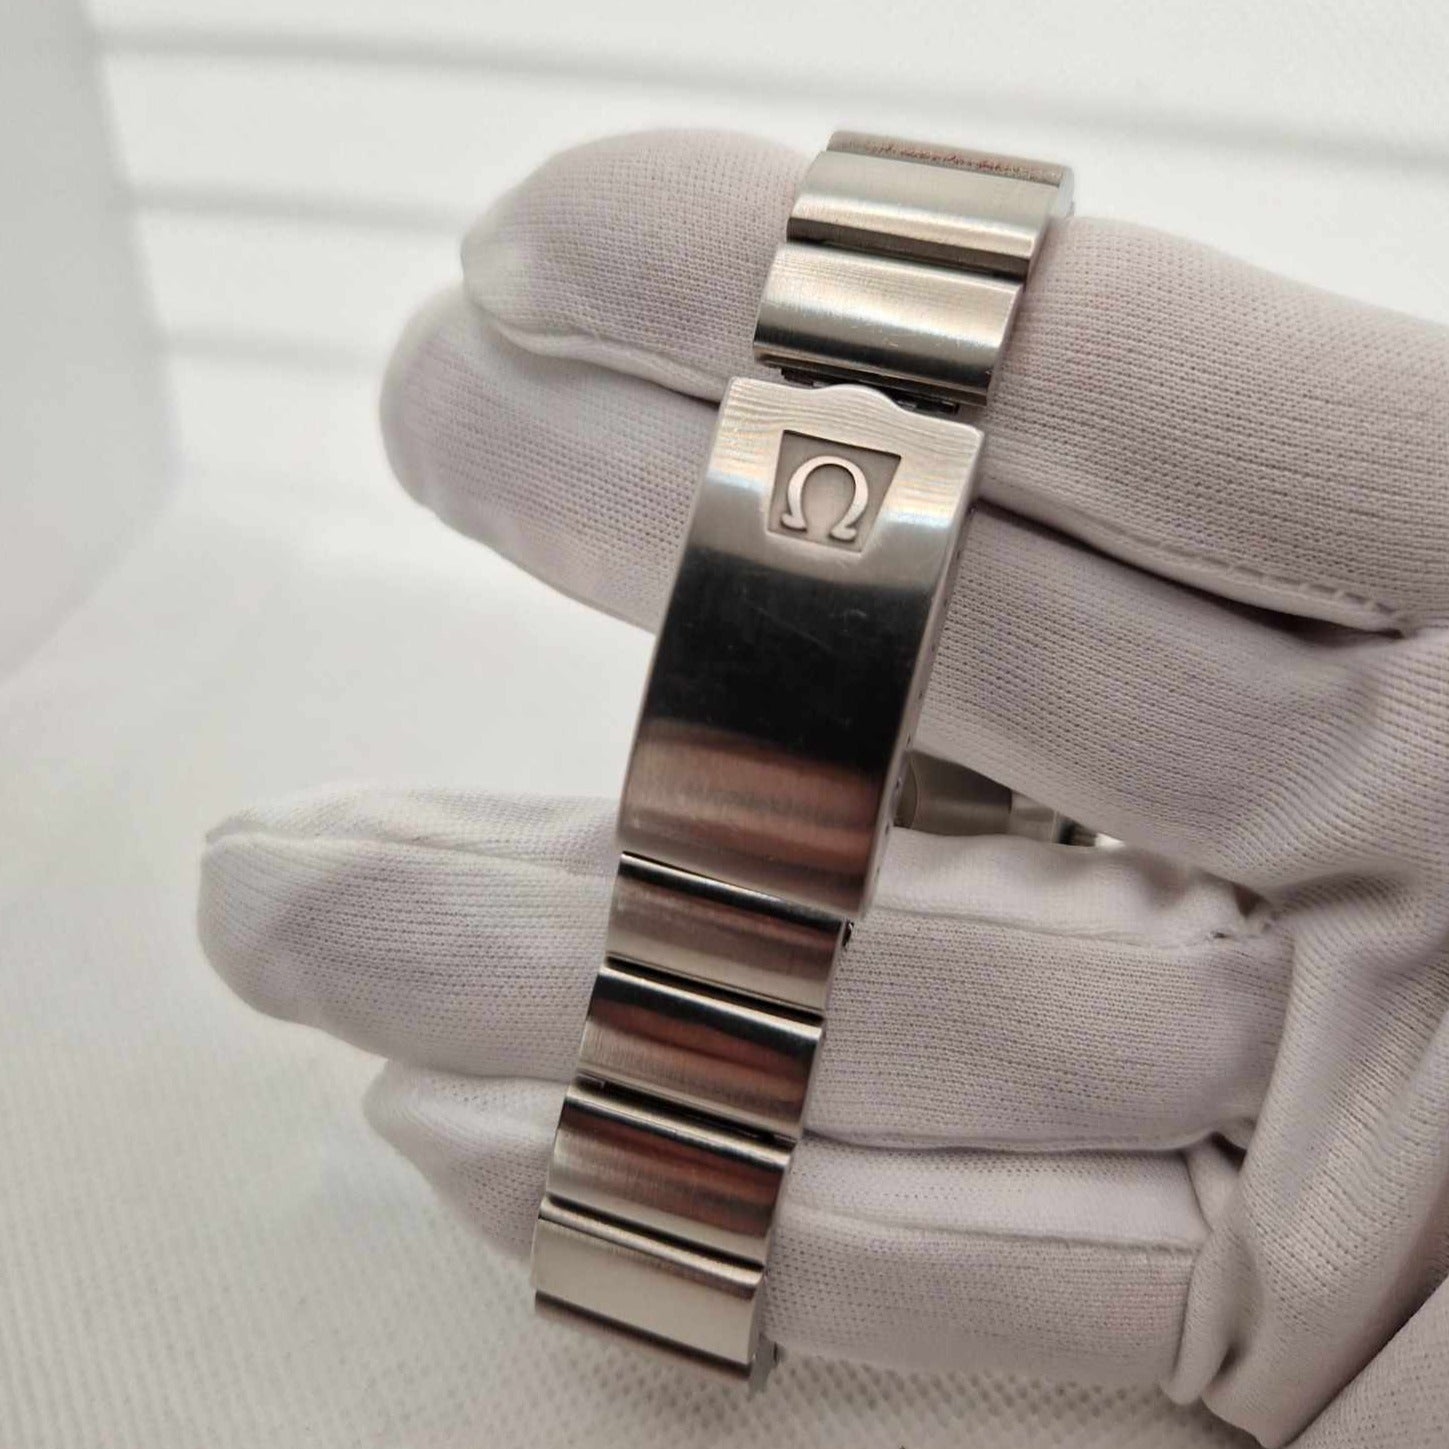 Original stainless steel bracelet/leather strap of the Omega Speedmaster Mark 4.5 Reference 176.0015.